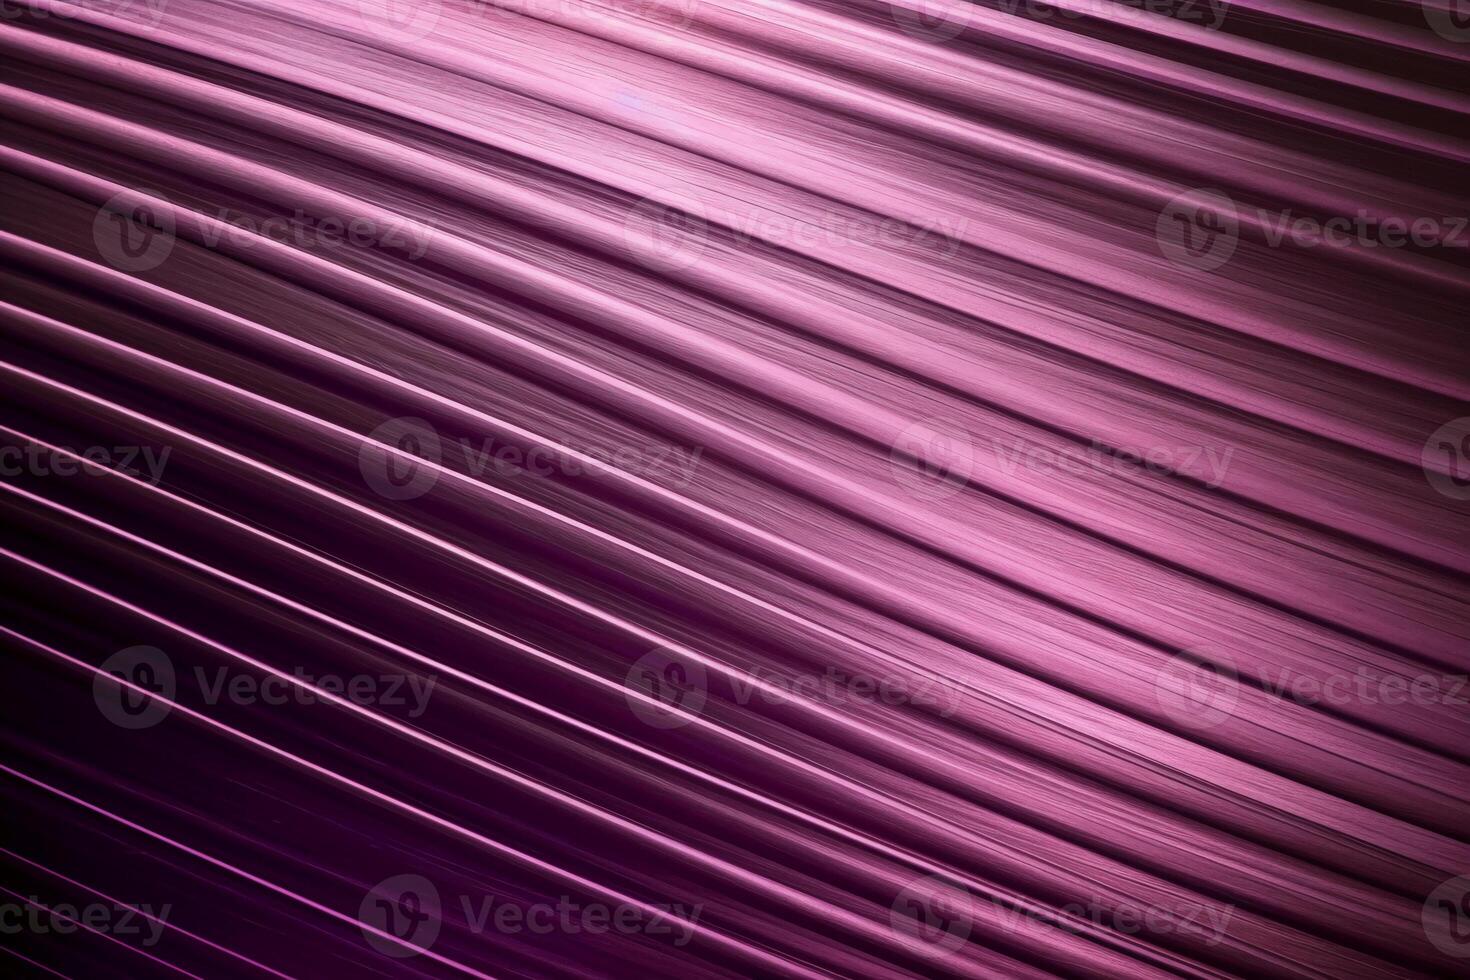 Brushed metal light purple background. photo